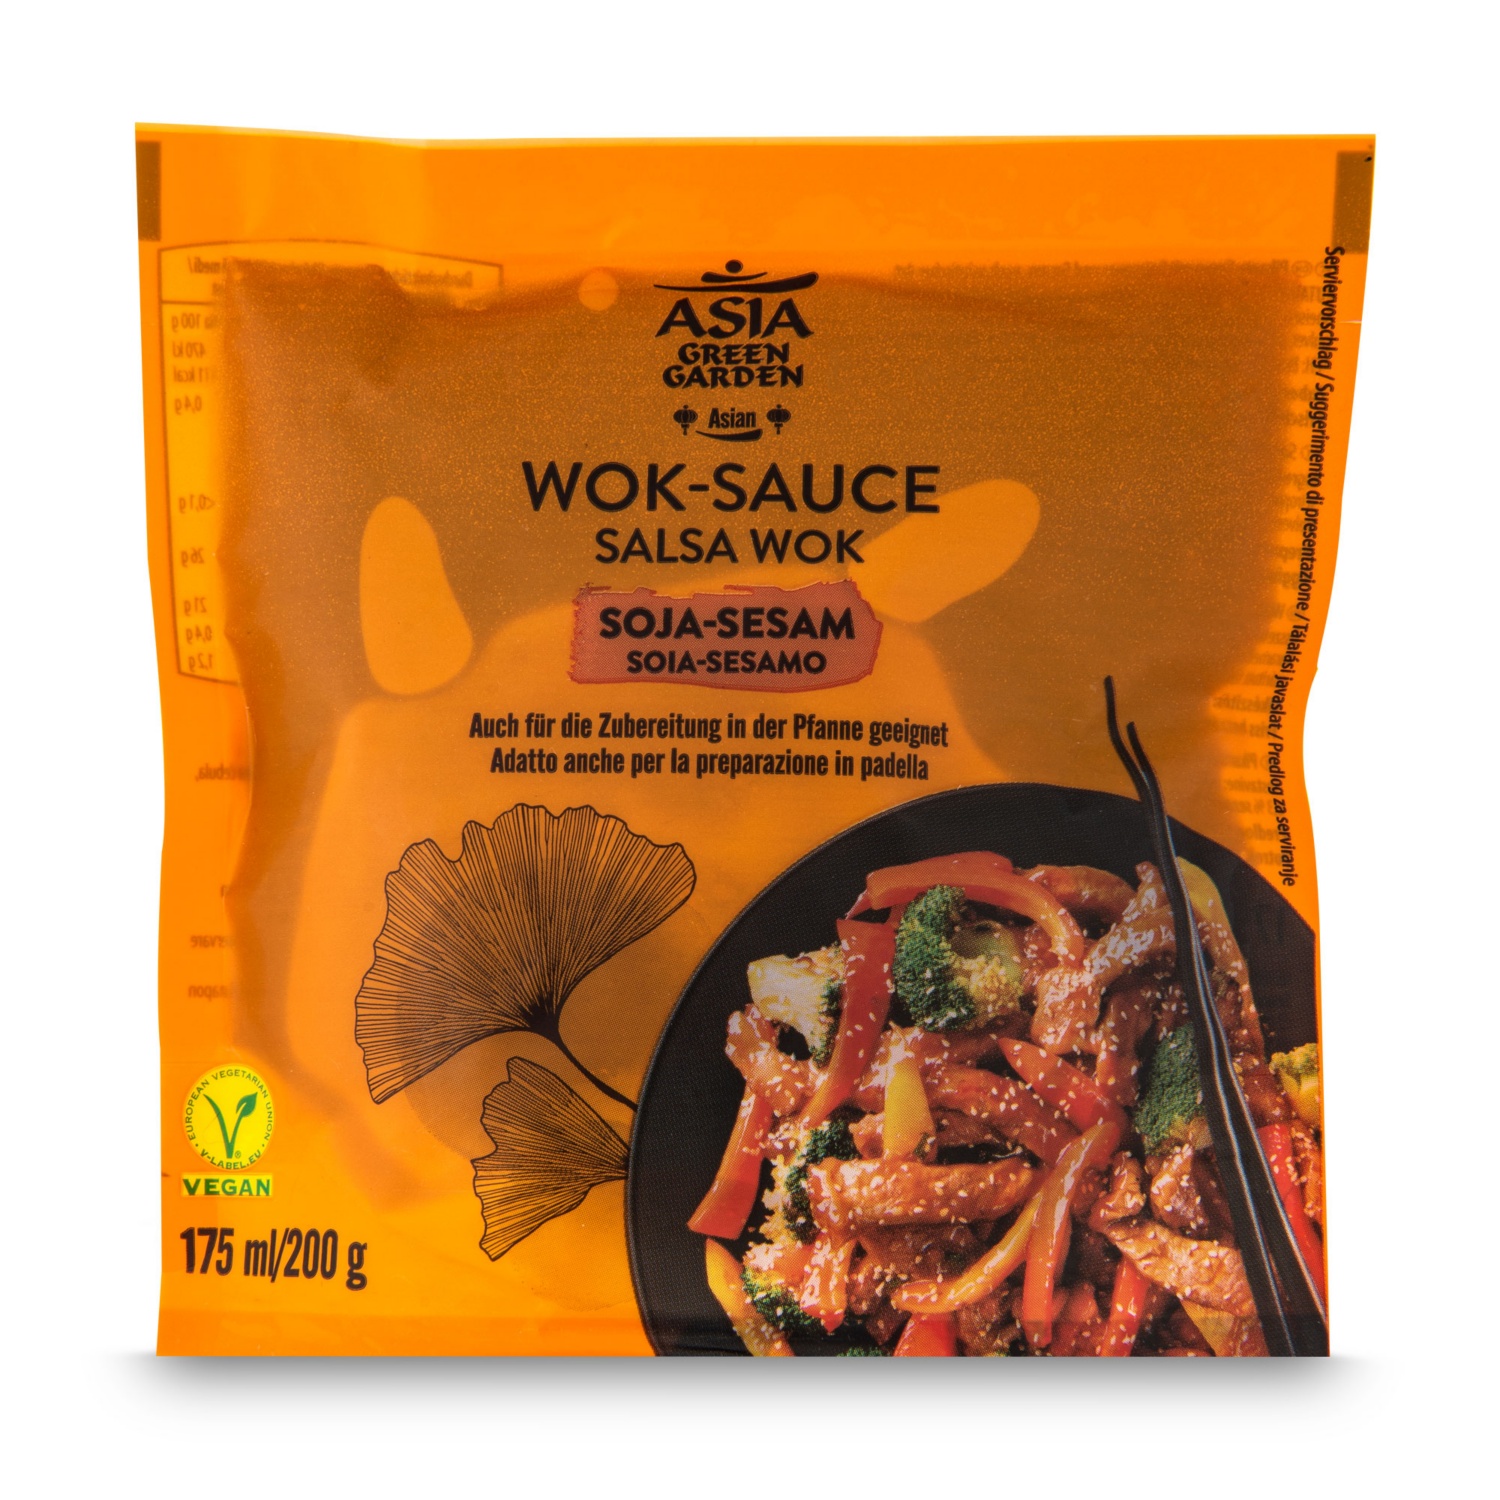 ASIA GREEN GARDEN Wok Sauce, Soja-Sesam